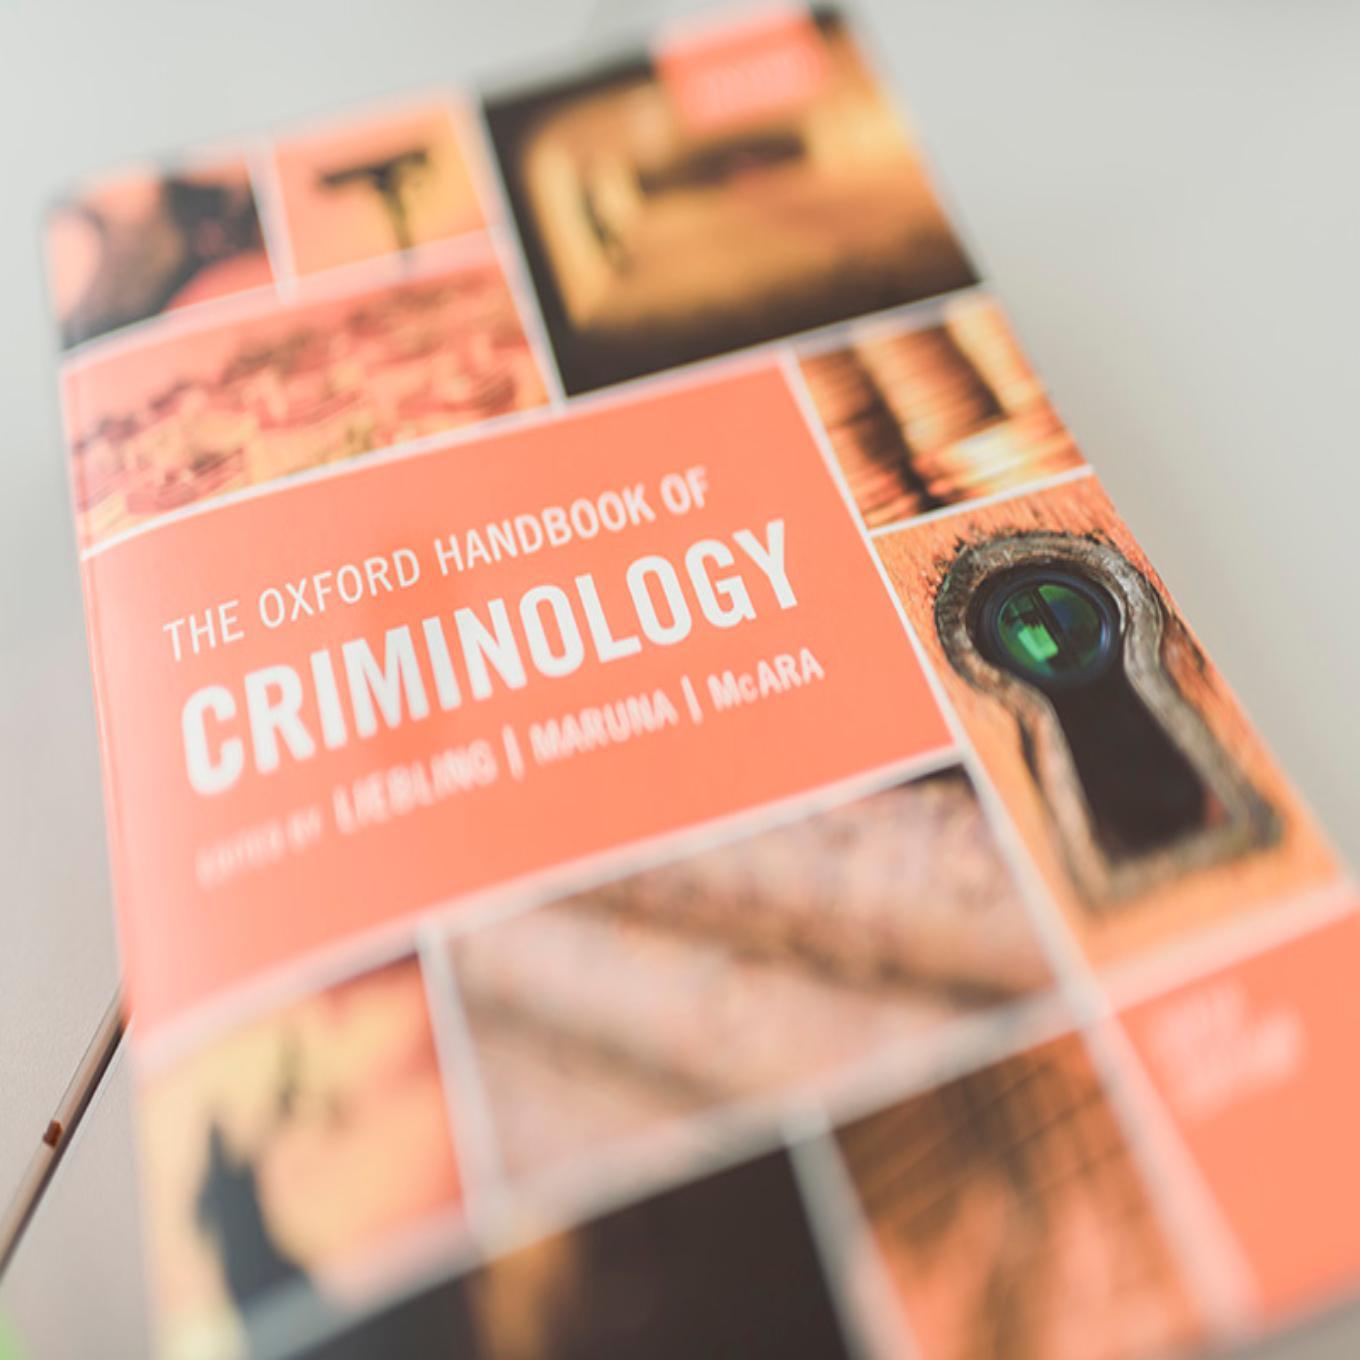 A criminology textbook